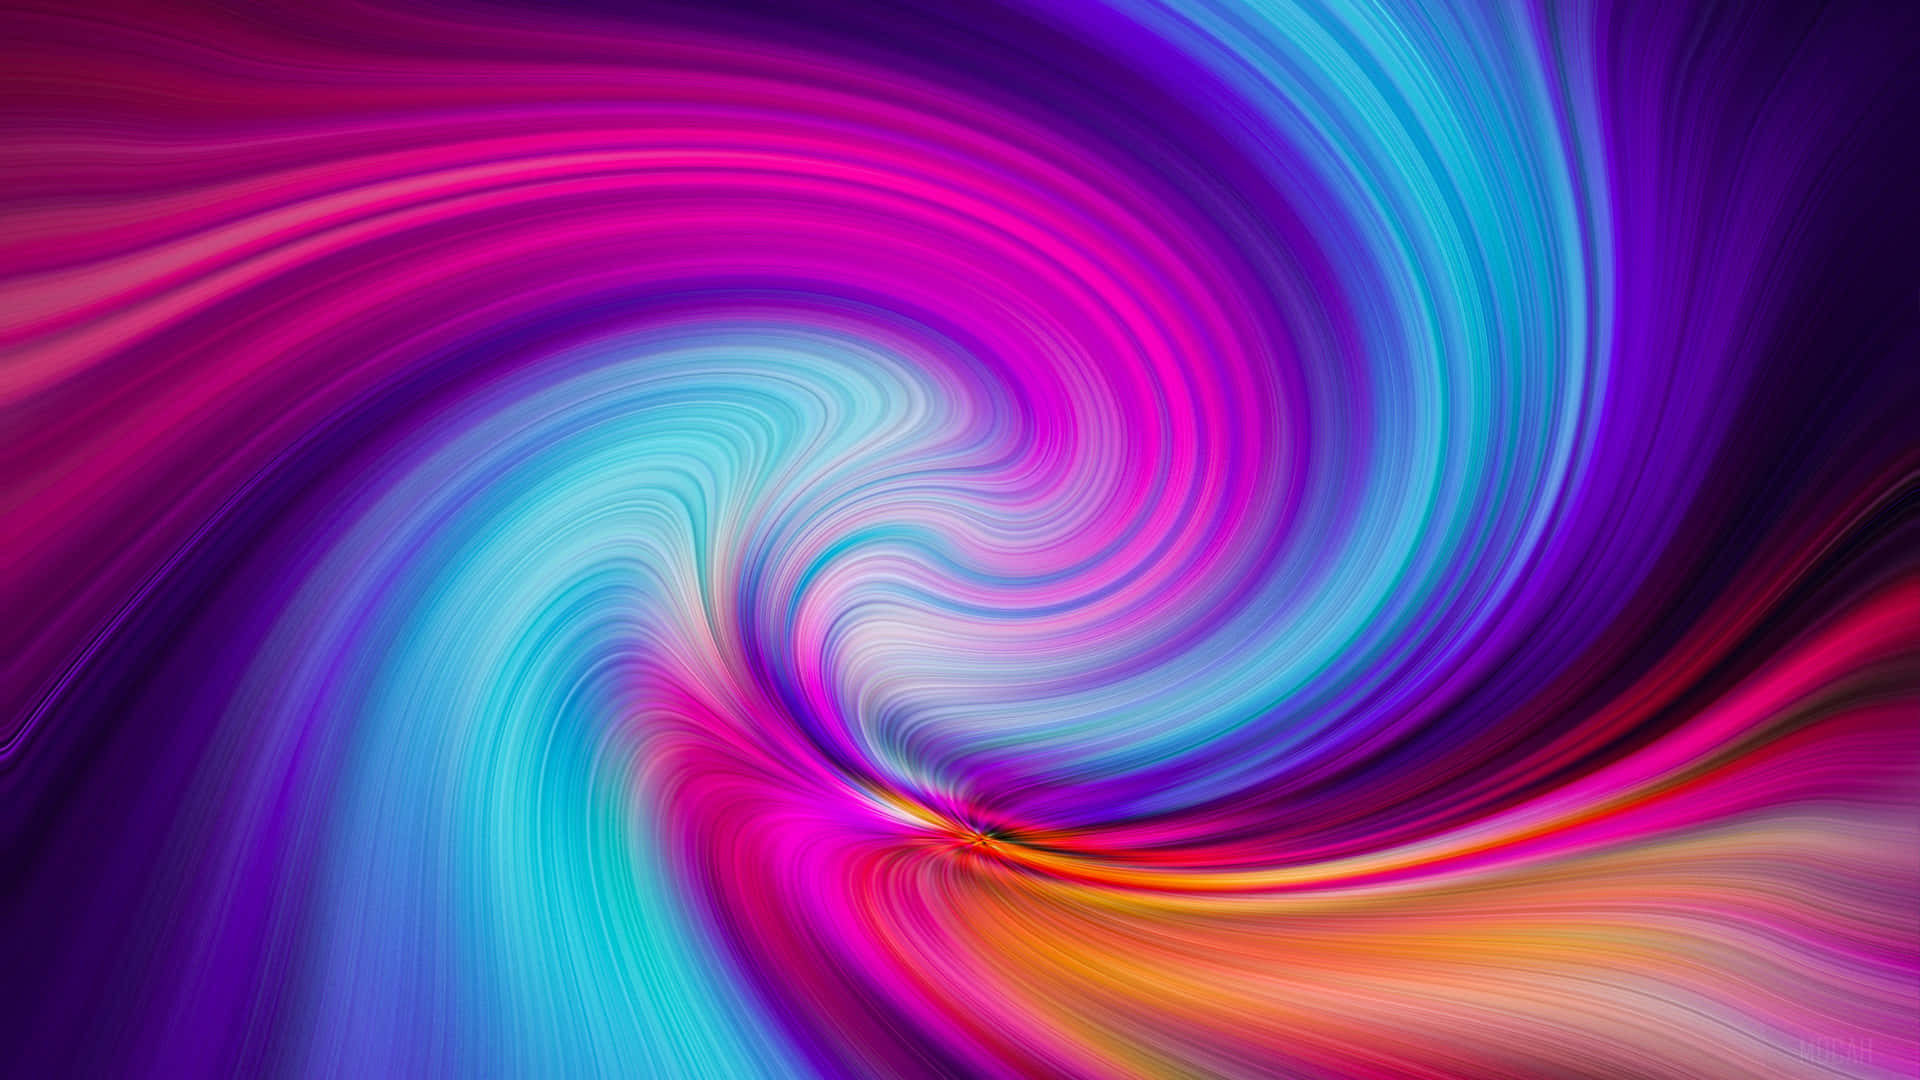 purple swirl background patterns